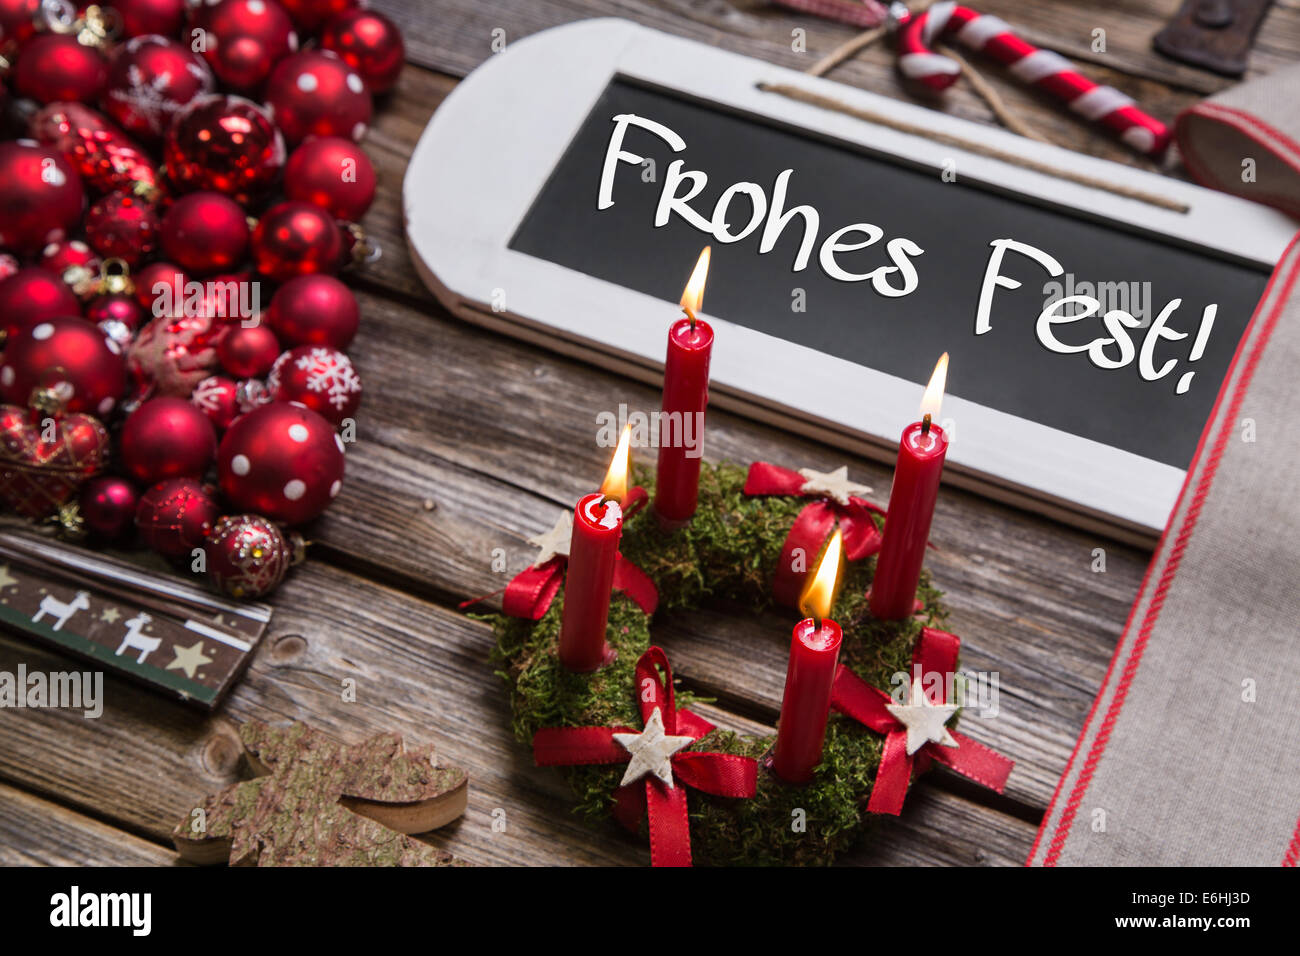 Merry Christmas greeting card con quattro candele rosse e testo tedesco: "Frohes Fest'. Foto Stock